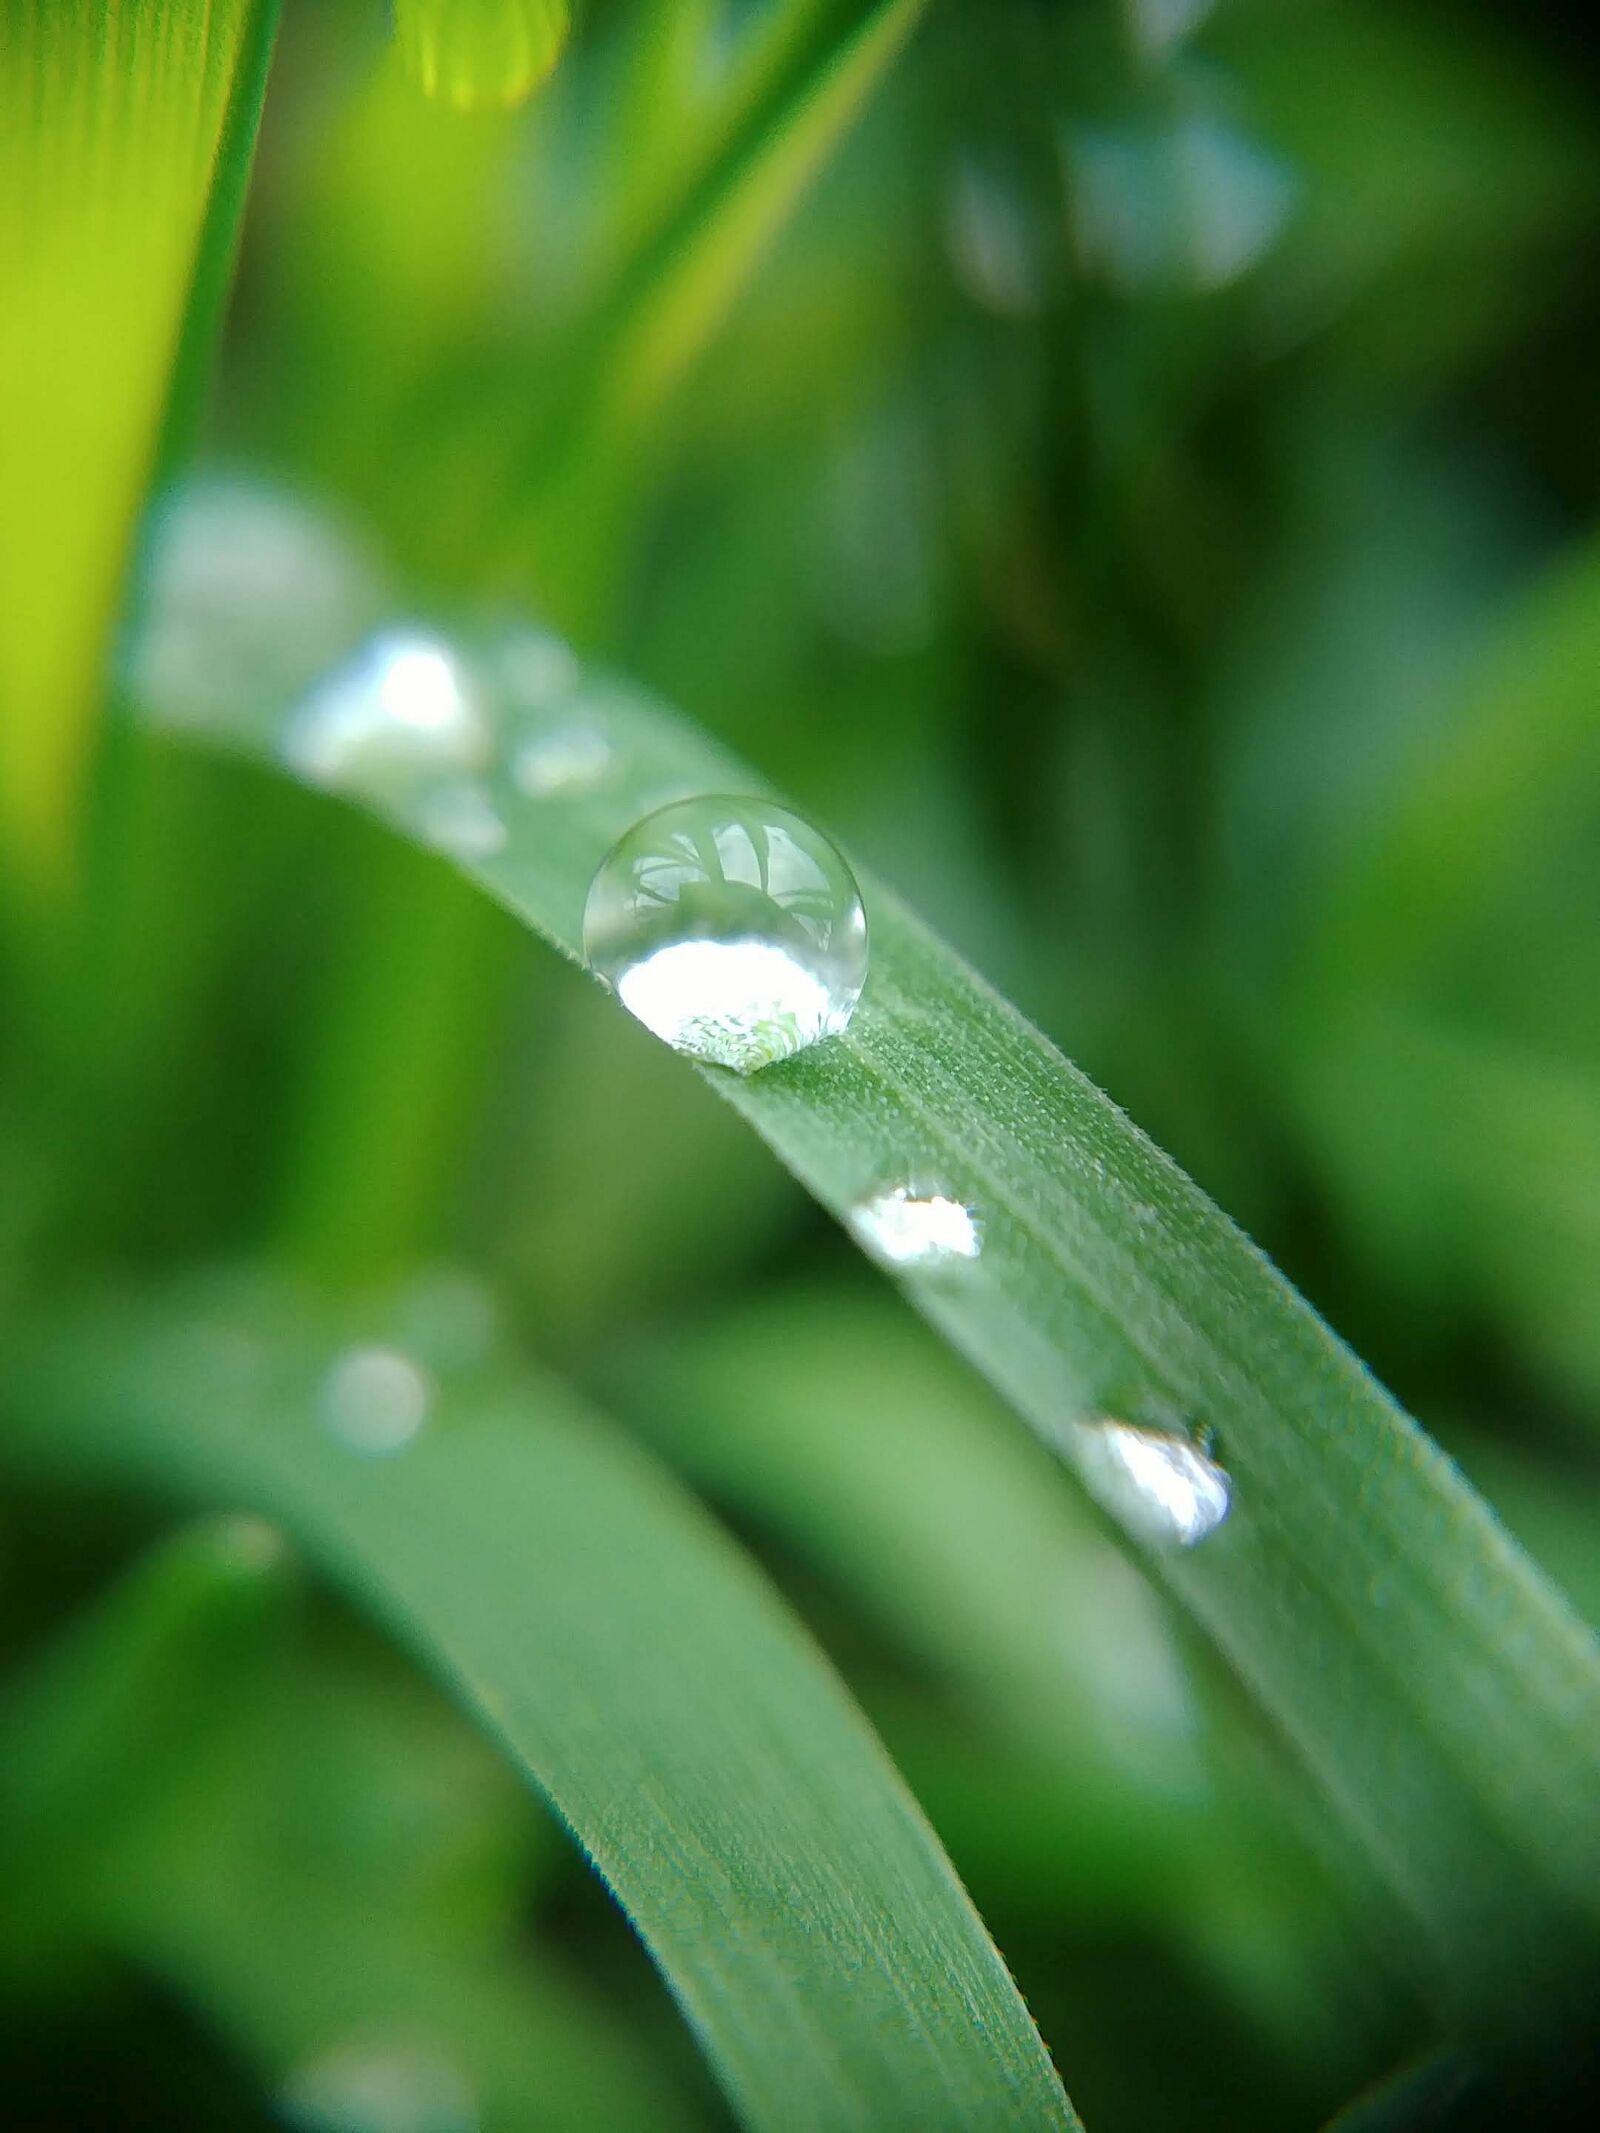 LG G6 sample photo. Grass, green leaves, raindrop photography